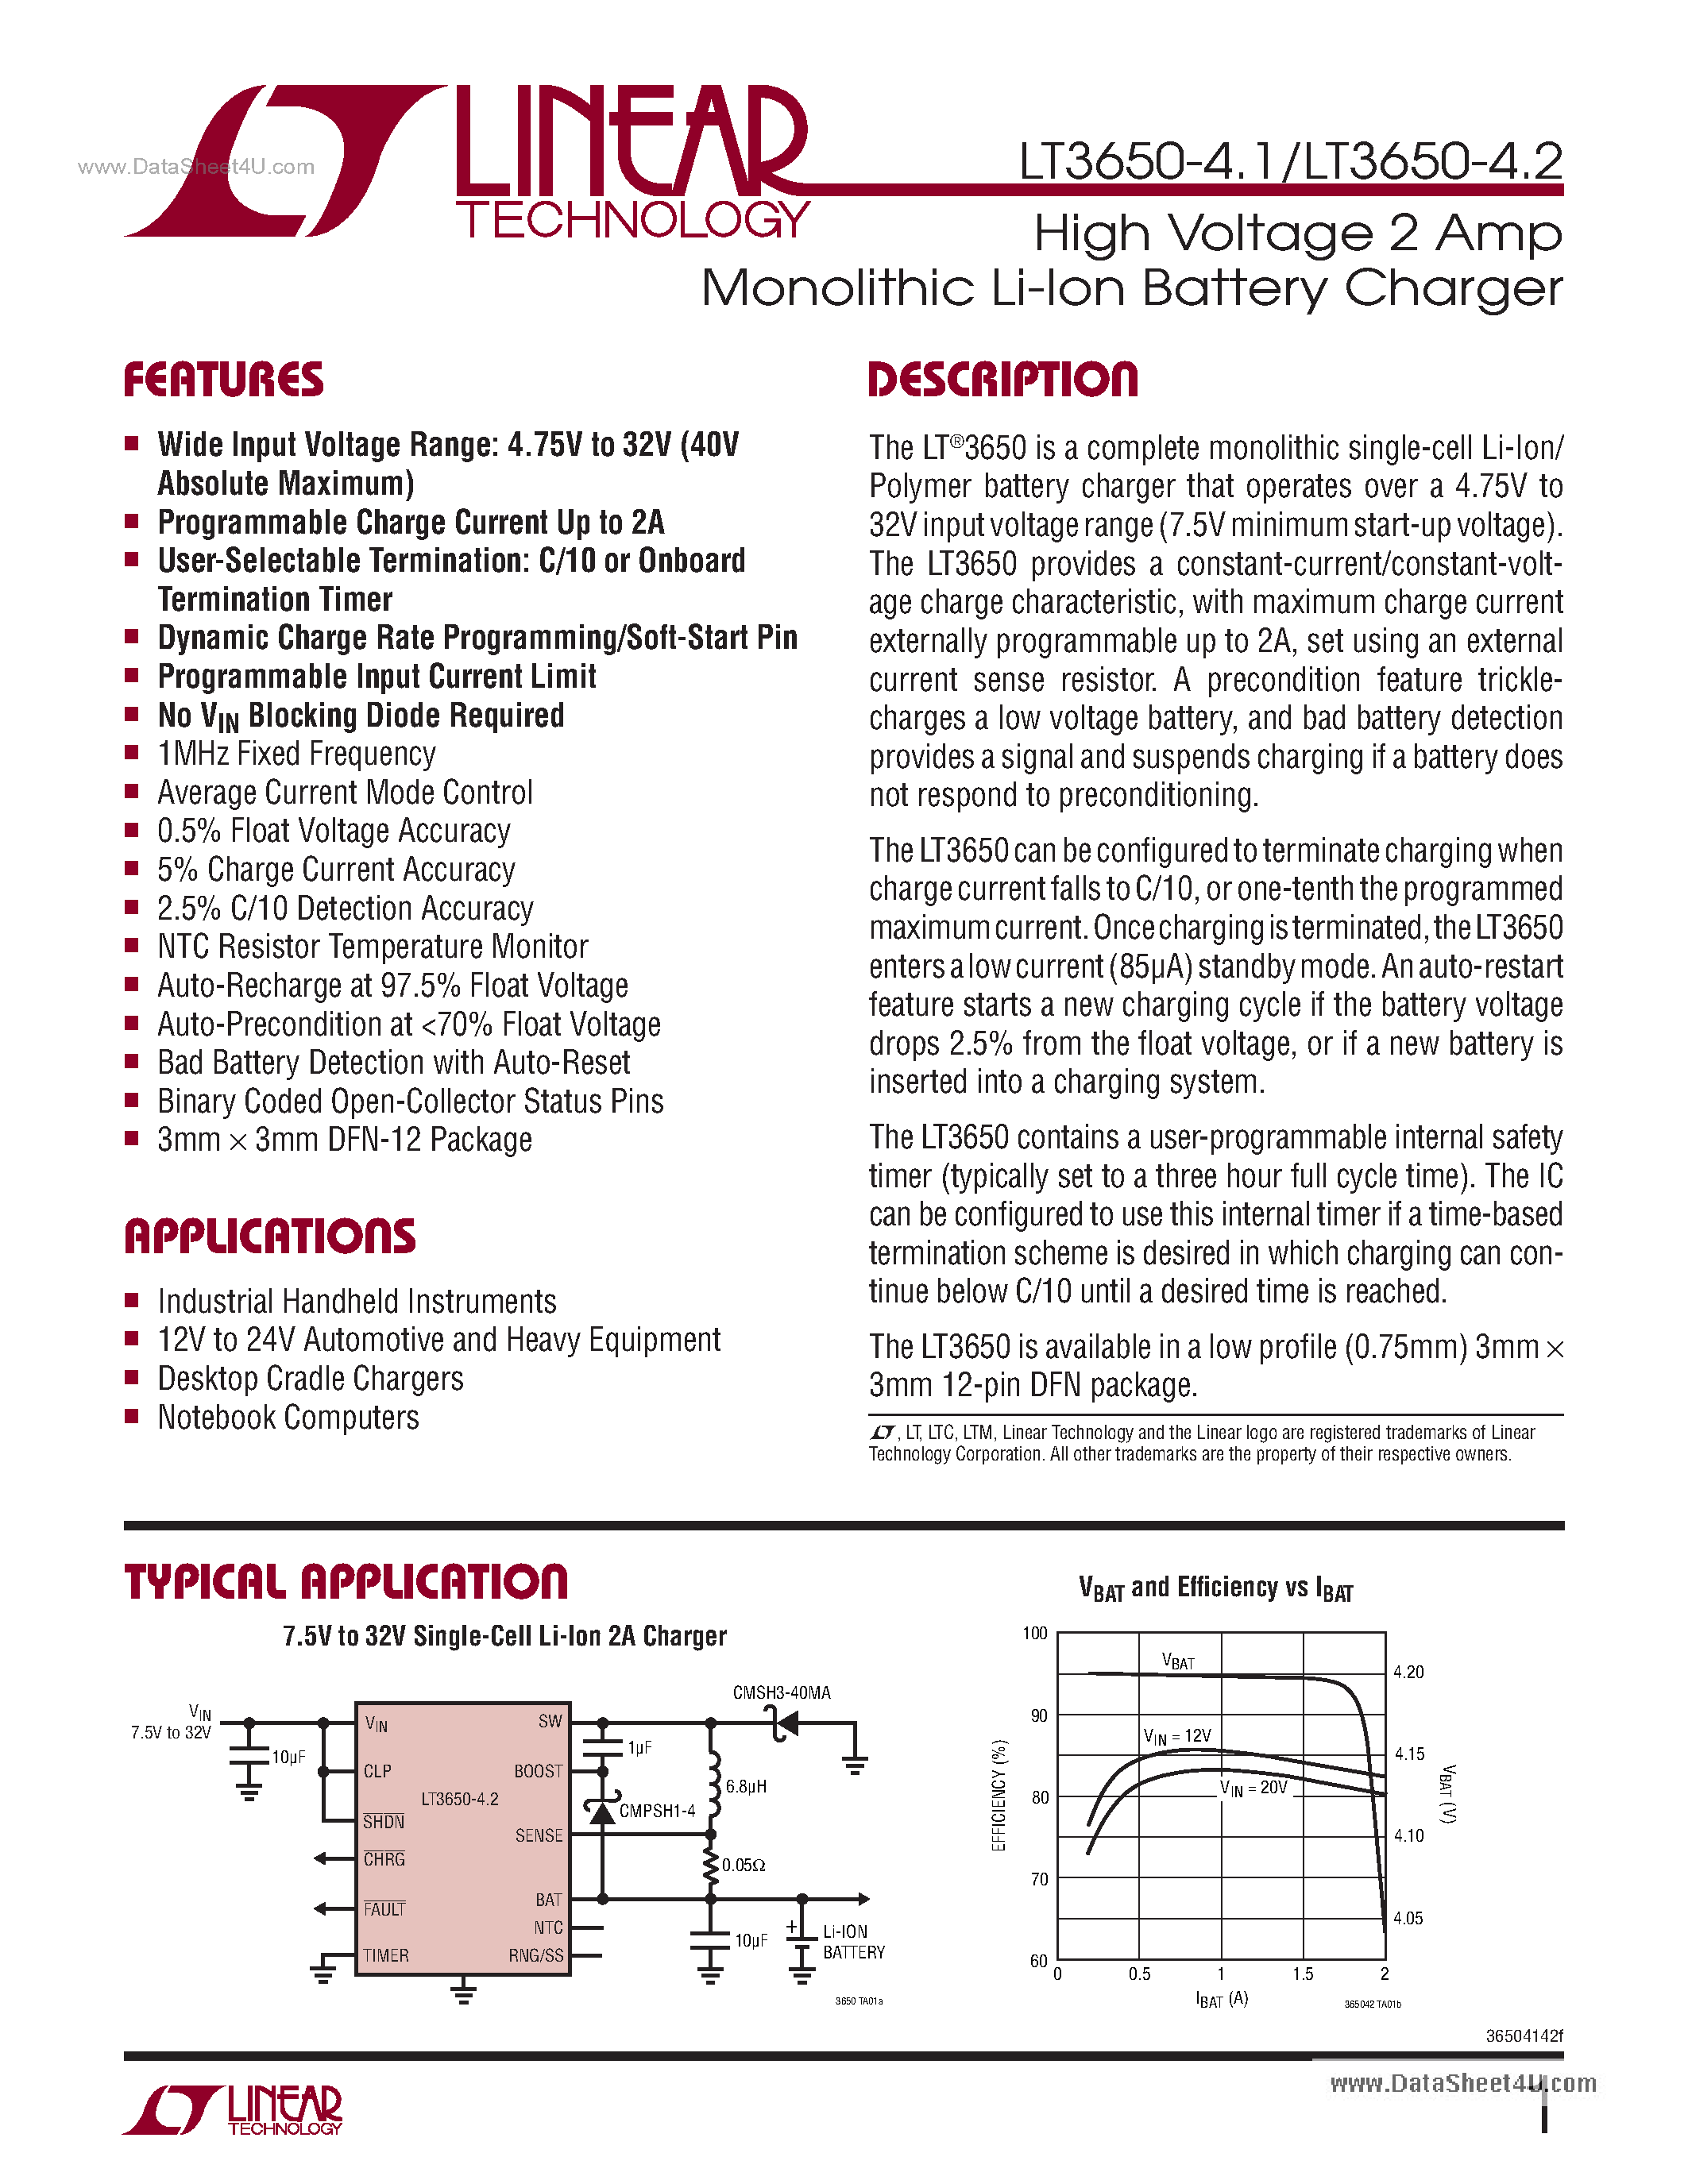 Даташит LT3650-4.1 - (LT3650-4.1 / -4.2) High Voltage 2 Amp Monolithic Li-Ion Battery Charger страница 1